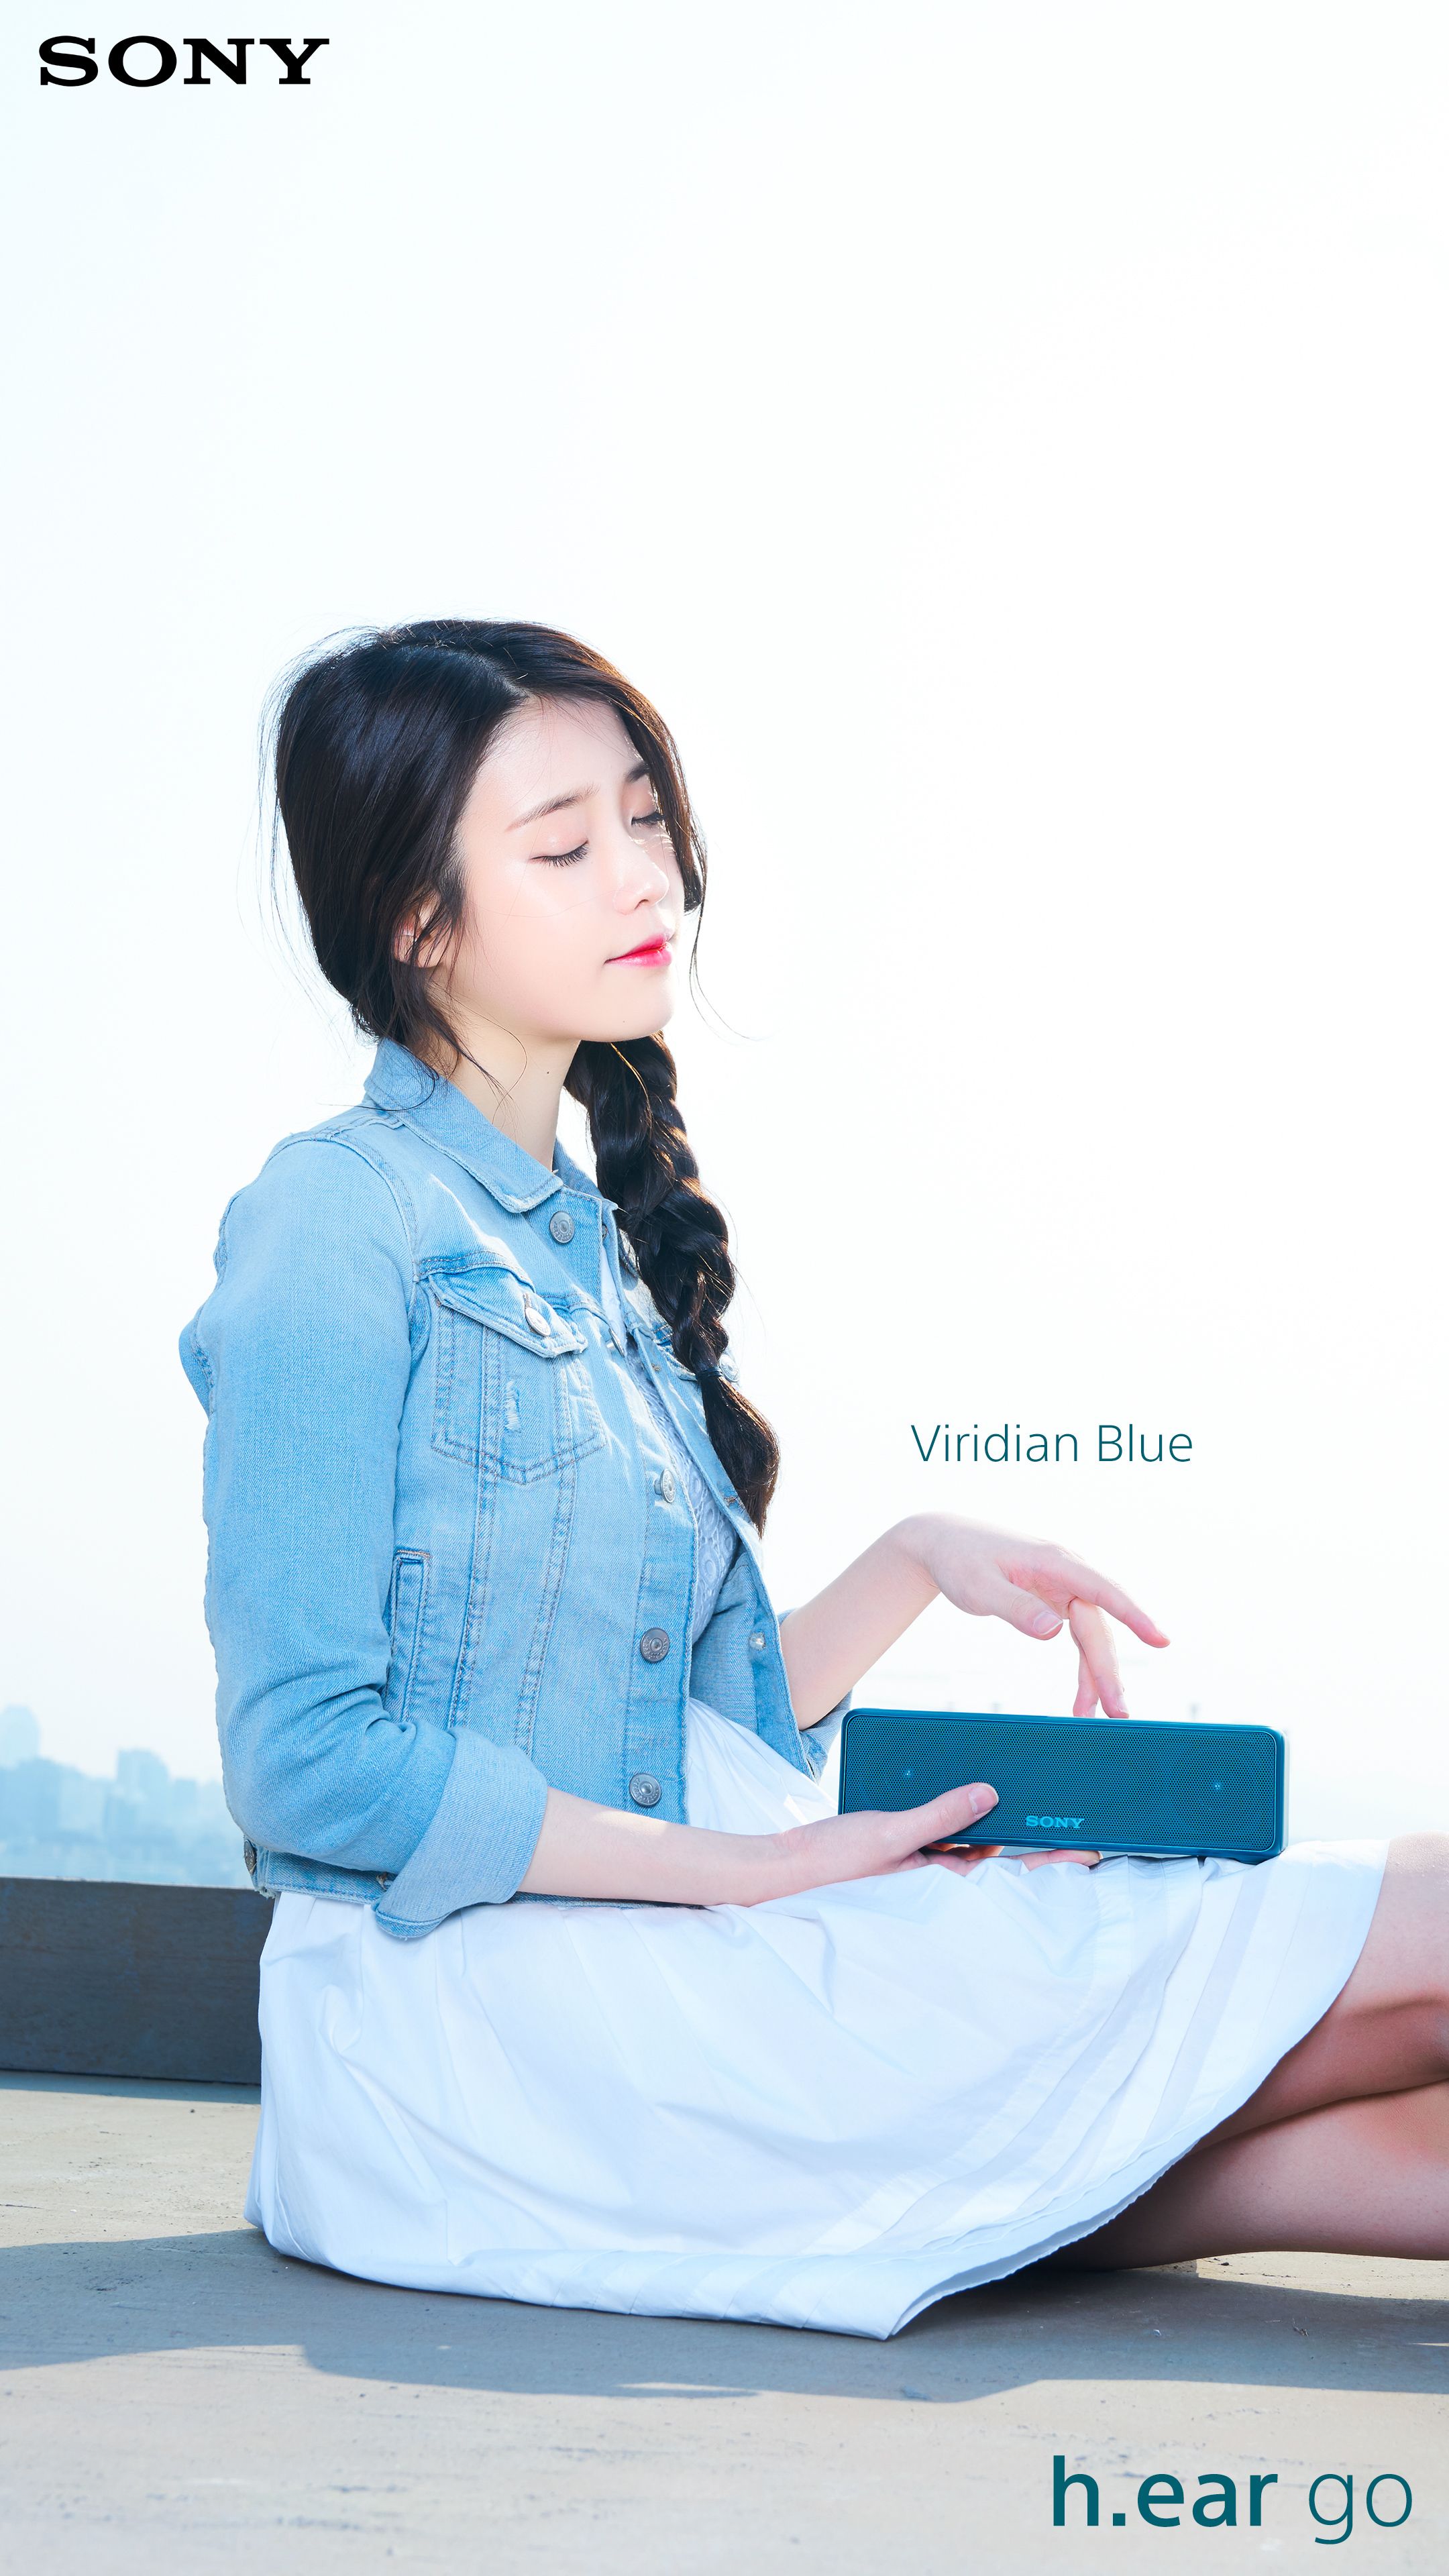 iu for Sony Korea 비리디언 블루 Viridian Blue